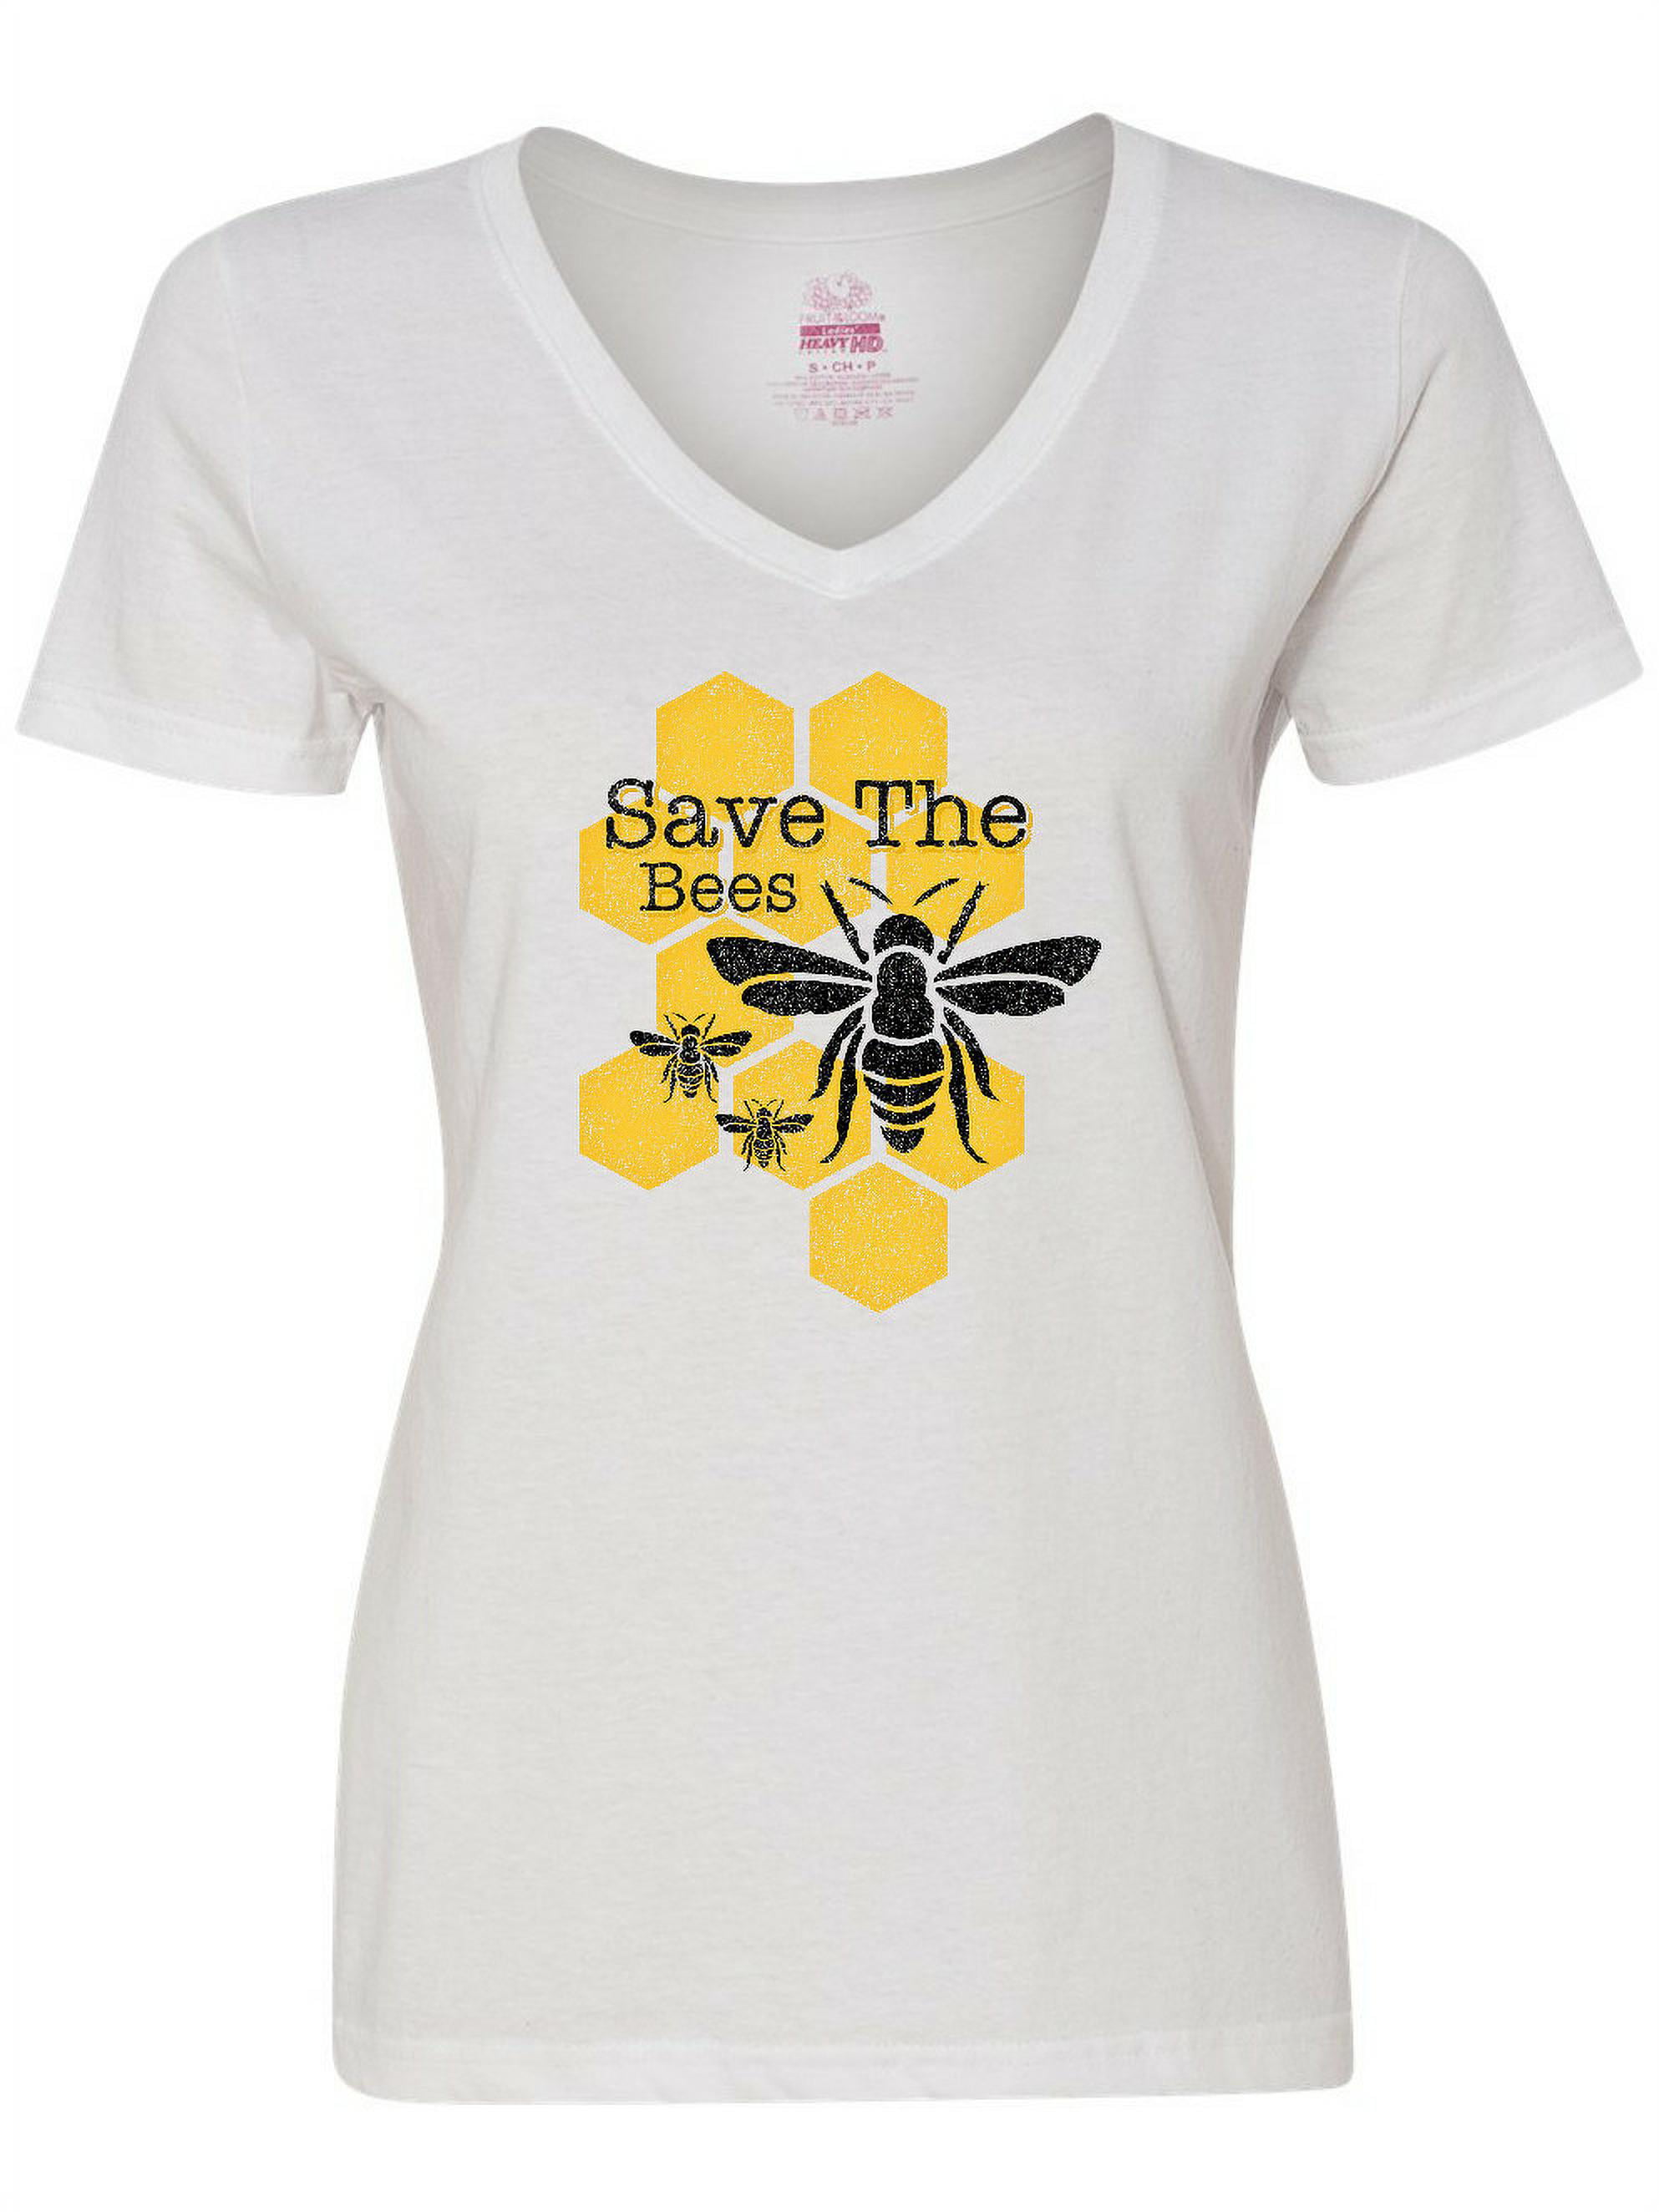 Bee Honeybee Shirt Bee Shirt Save The Bees Love T-shirt Vintage Bee T-Shirt Queen Bee Shirt Save The Bees Shirt